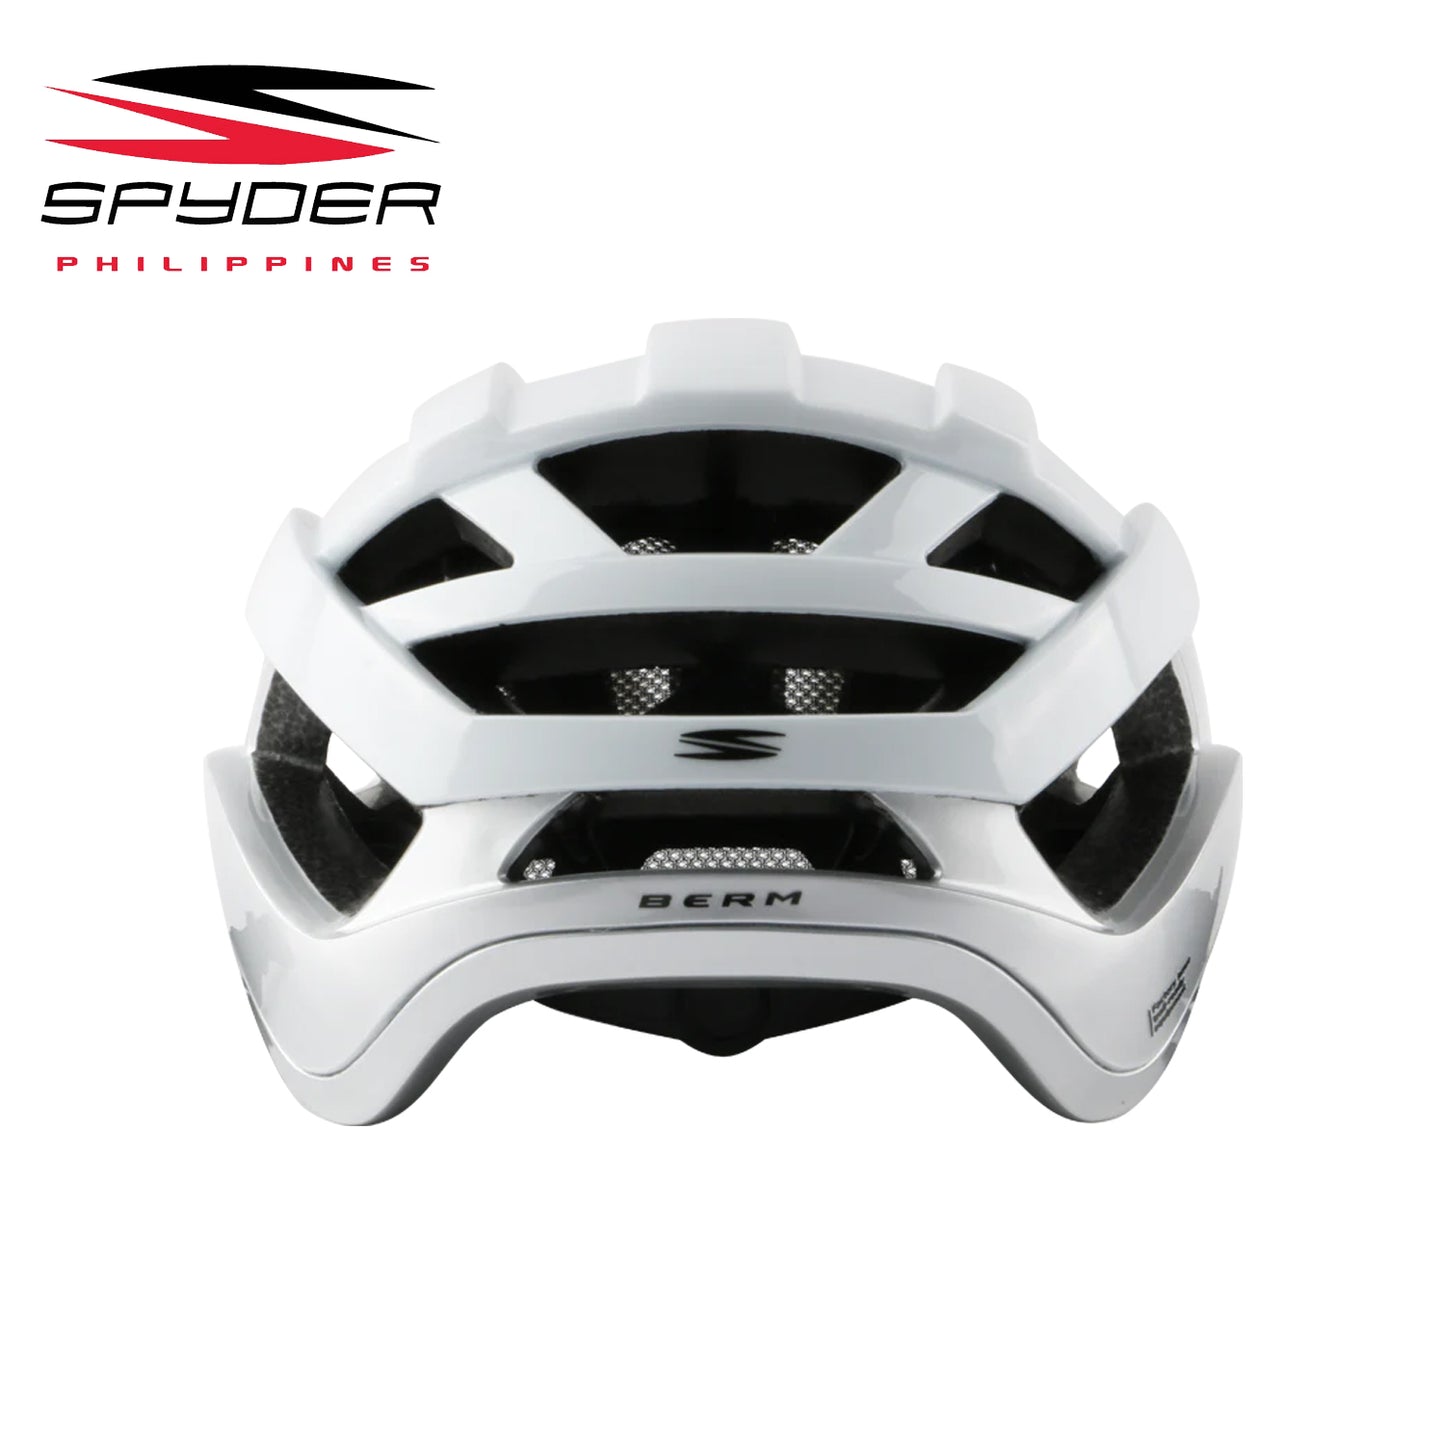 Spyder BERM MTB Bike Helmet - Arctic White